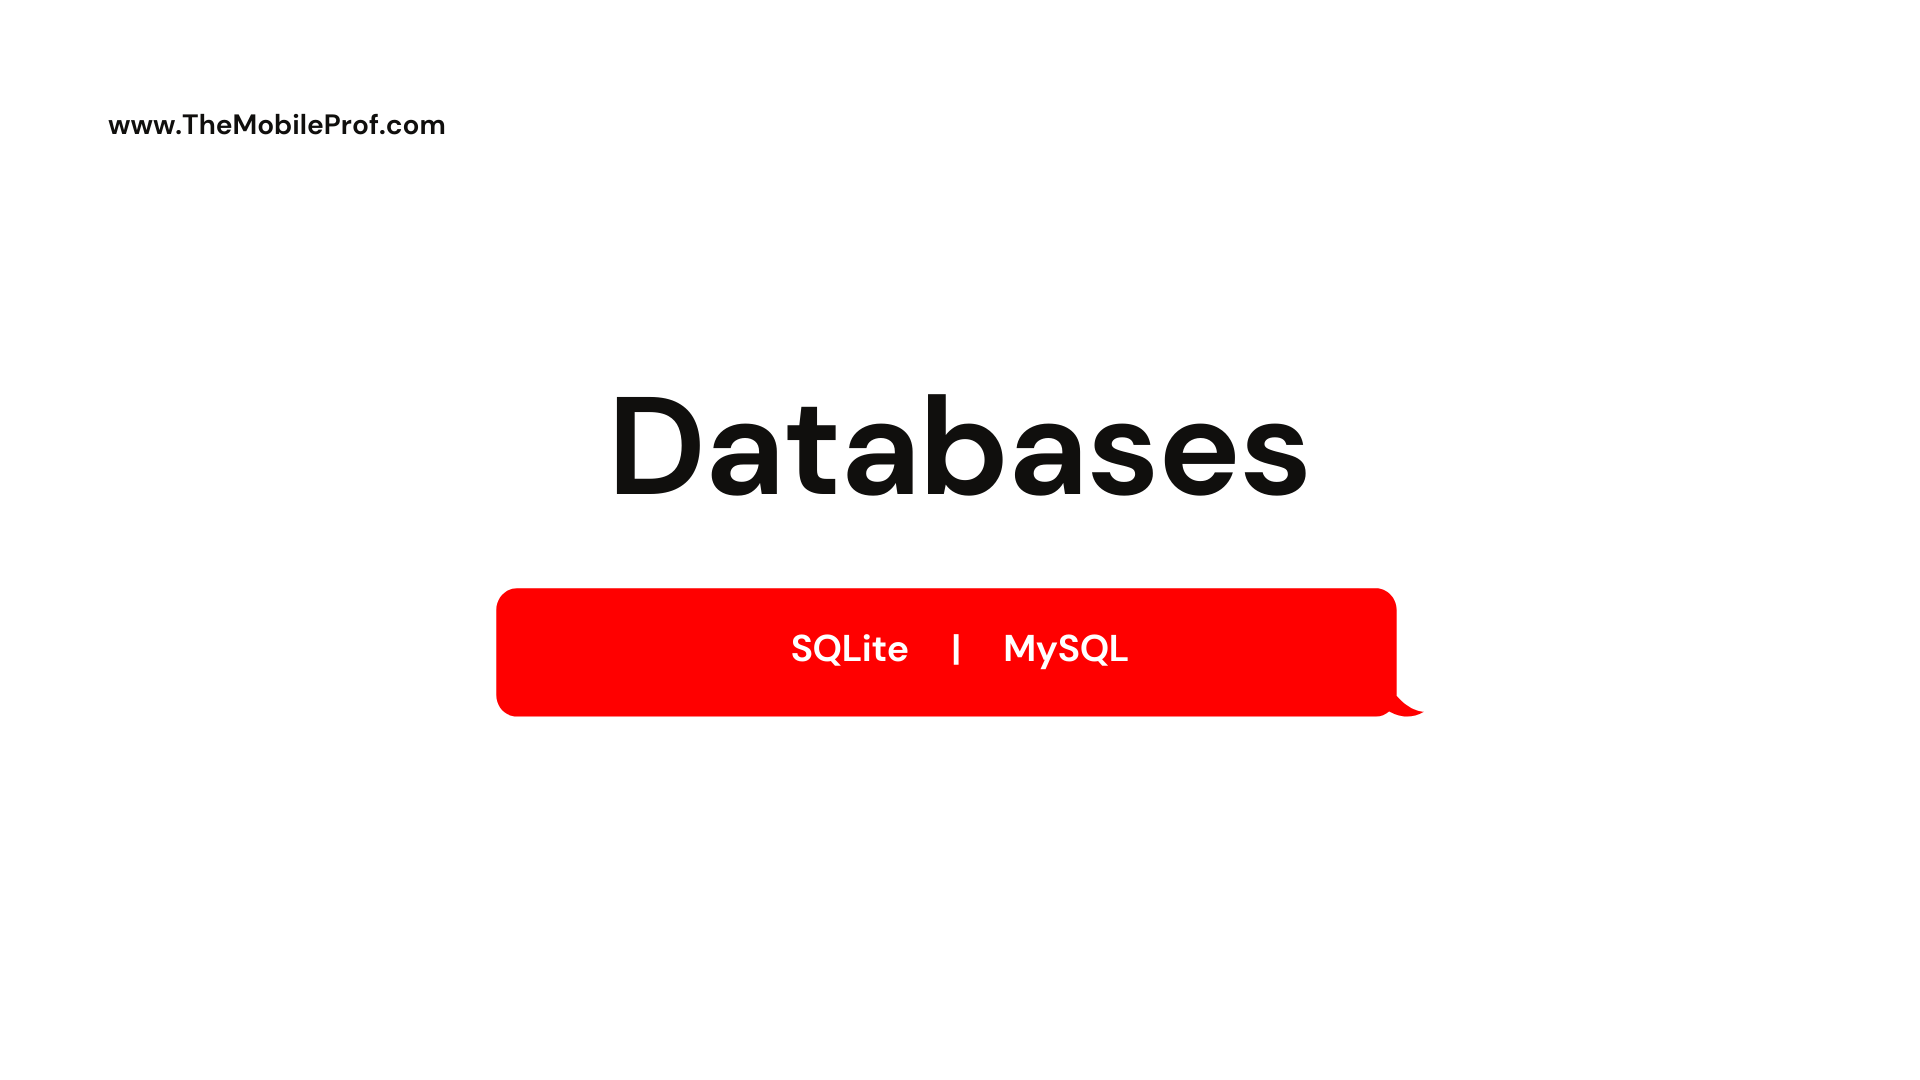 Databases = Sqlite and MySQL